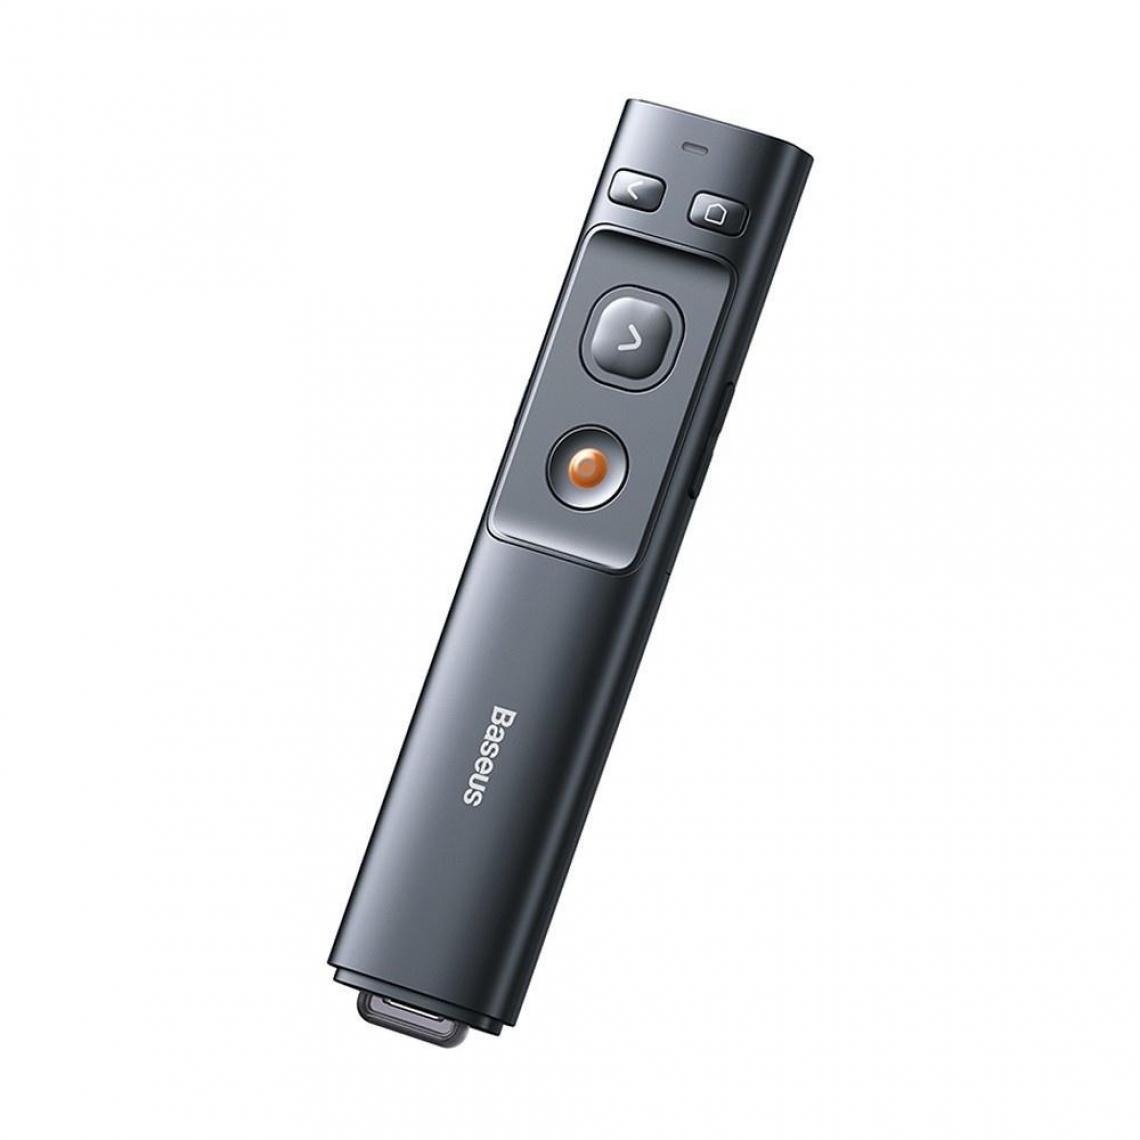 Justgreenbox - Pointeur laser sans fil Presenter Télécommande 2,4 GHz - 3654657655587 - Lasers